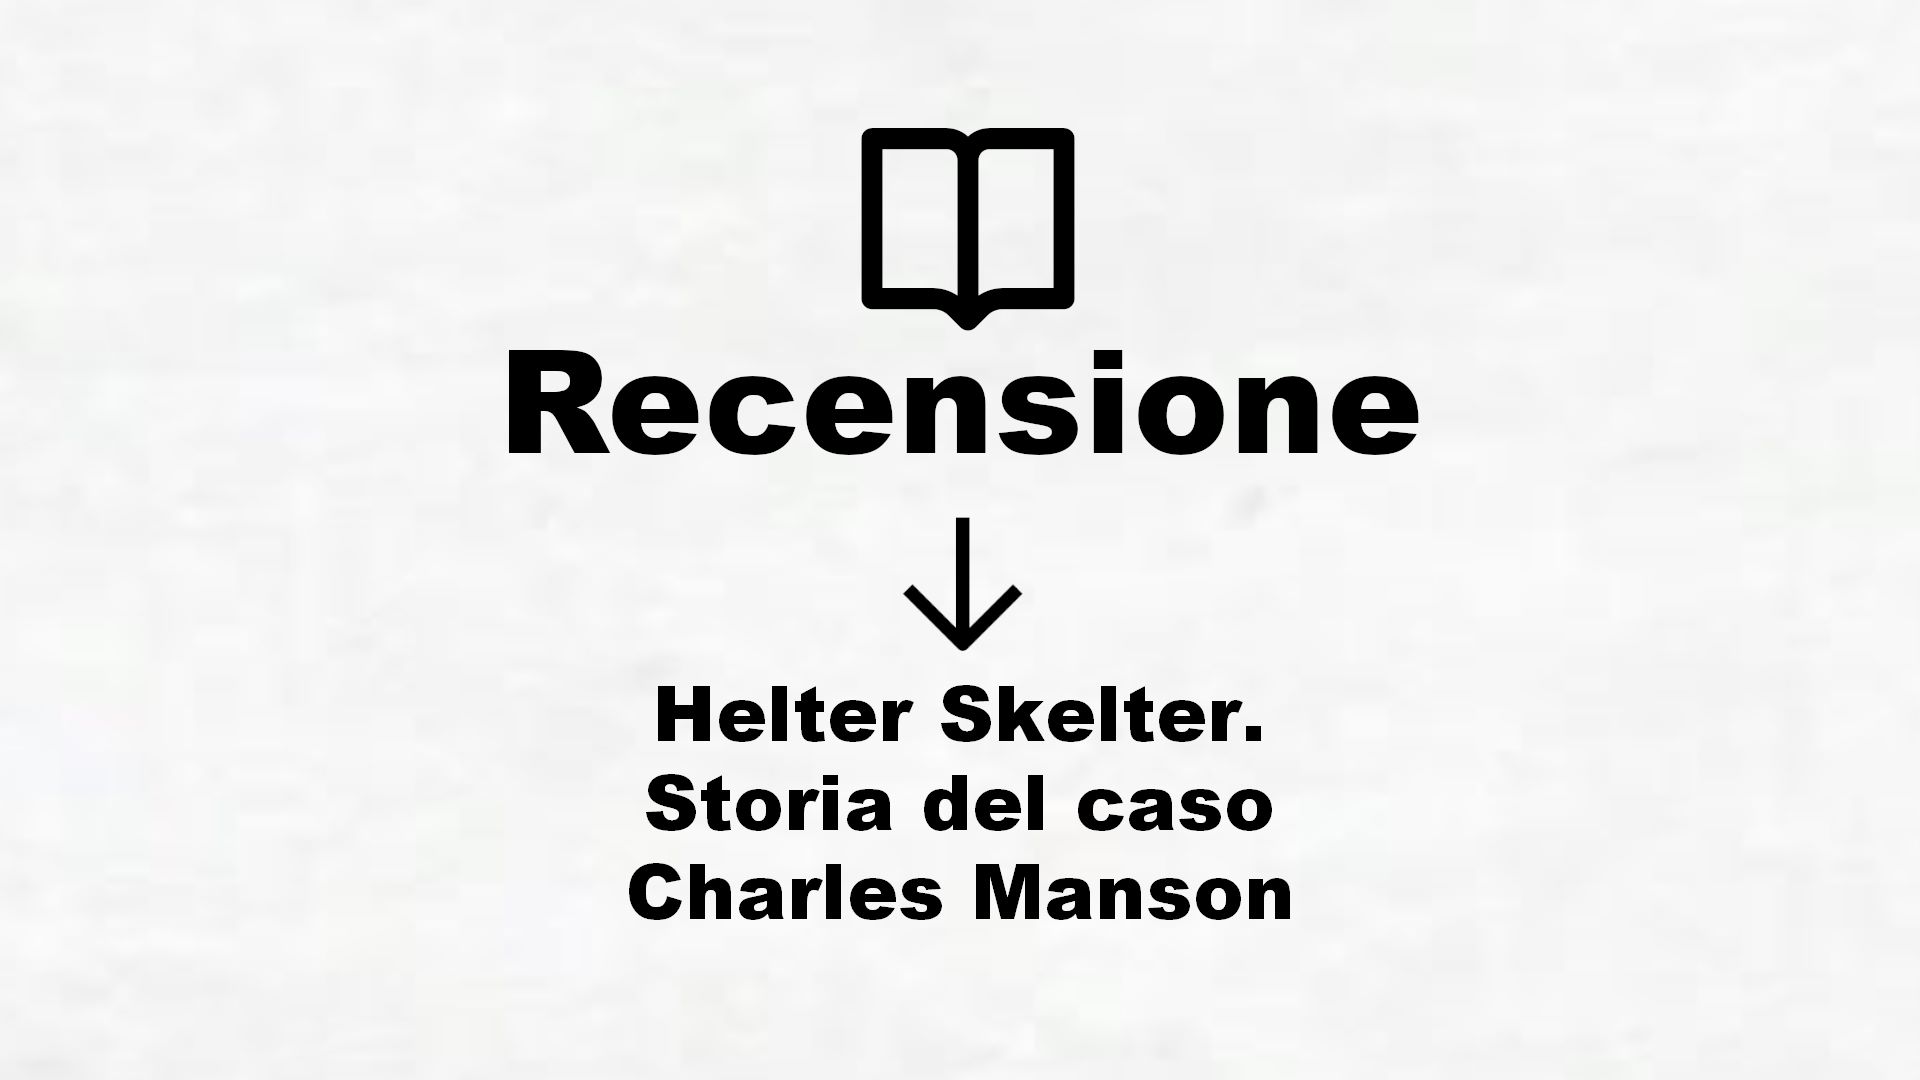 Helter Skelter. Storia del caso Charles Manson – Recensione Libro